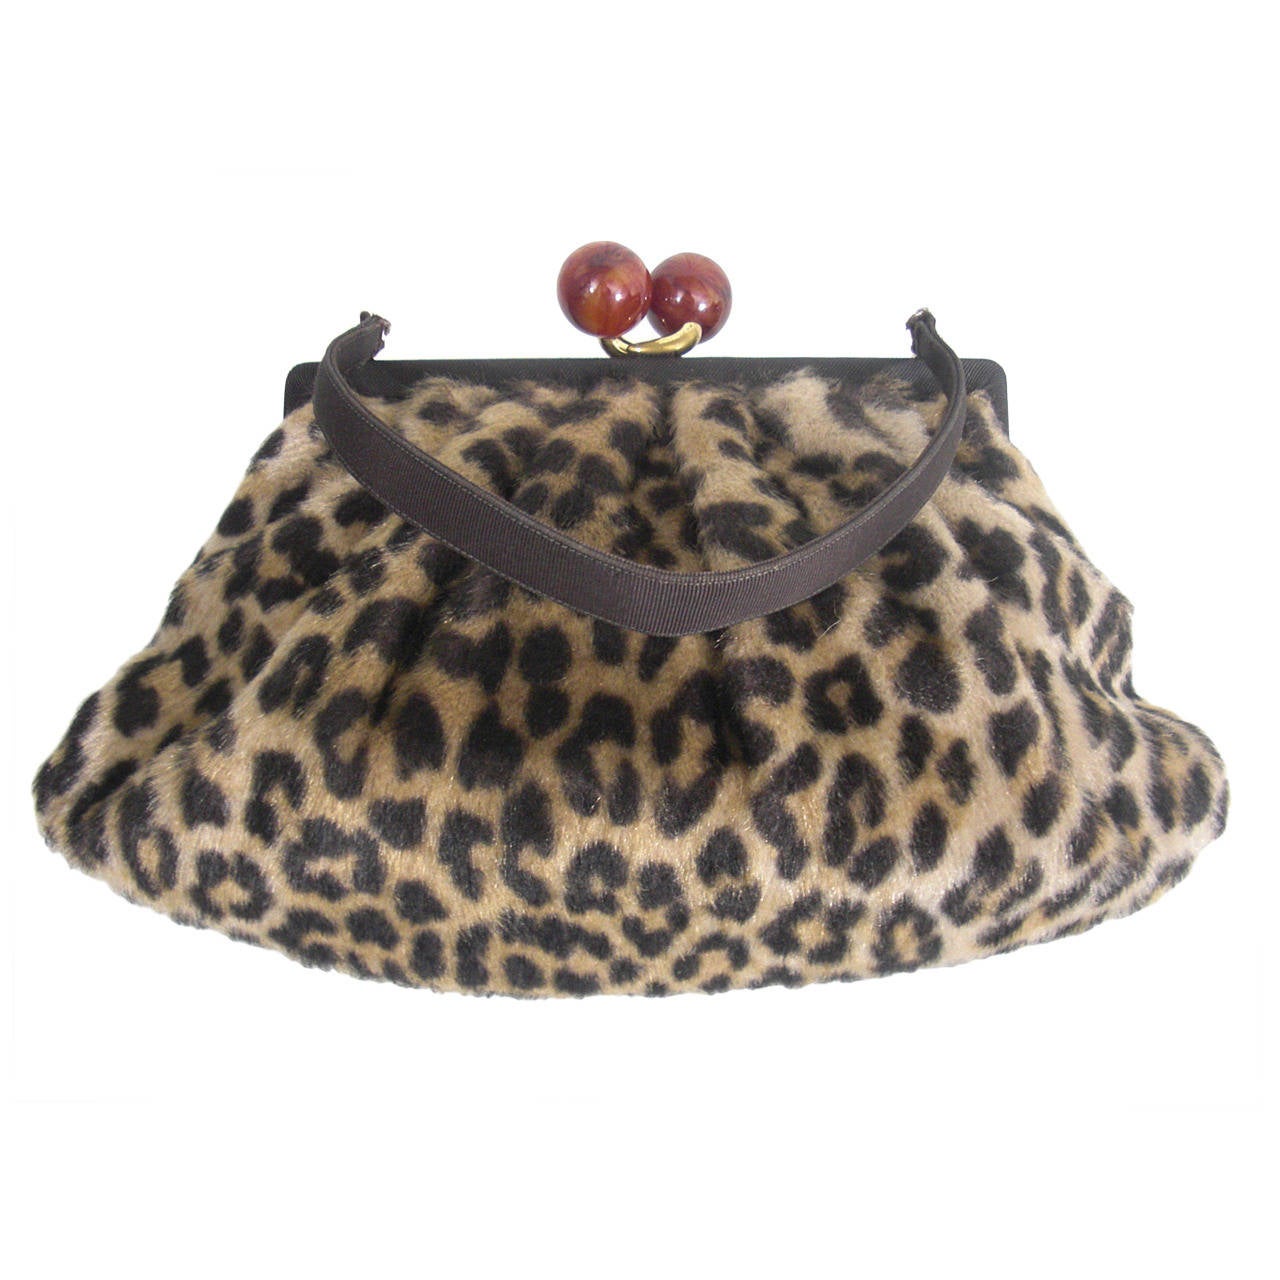 1950s Morris Moskowitz Faux Leopard Fur Handbag with Resin Closure